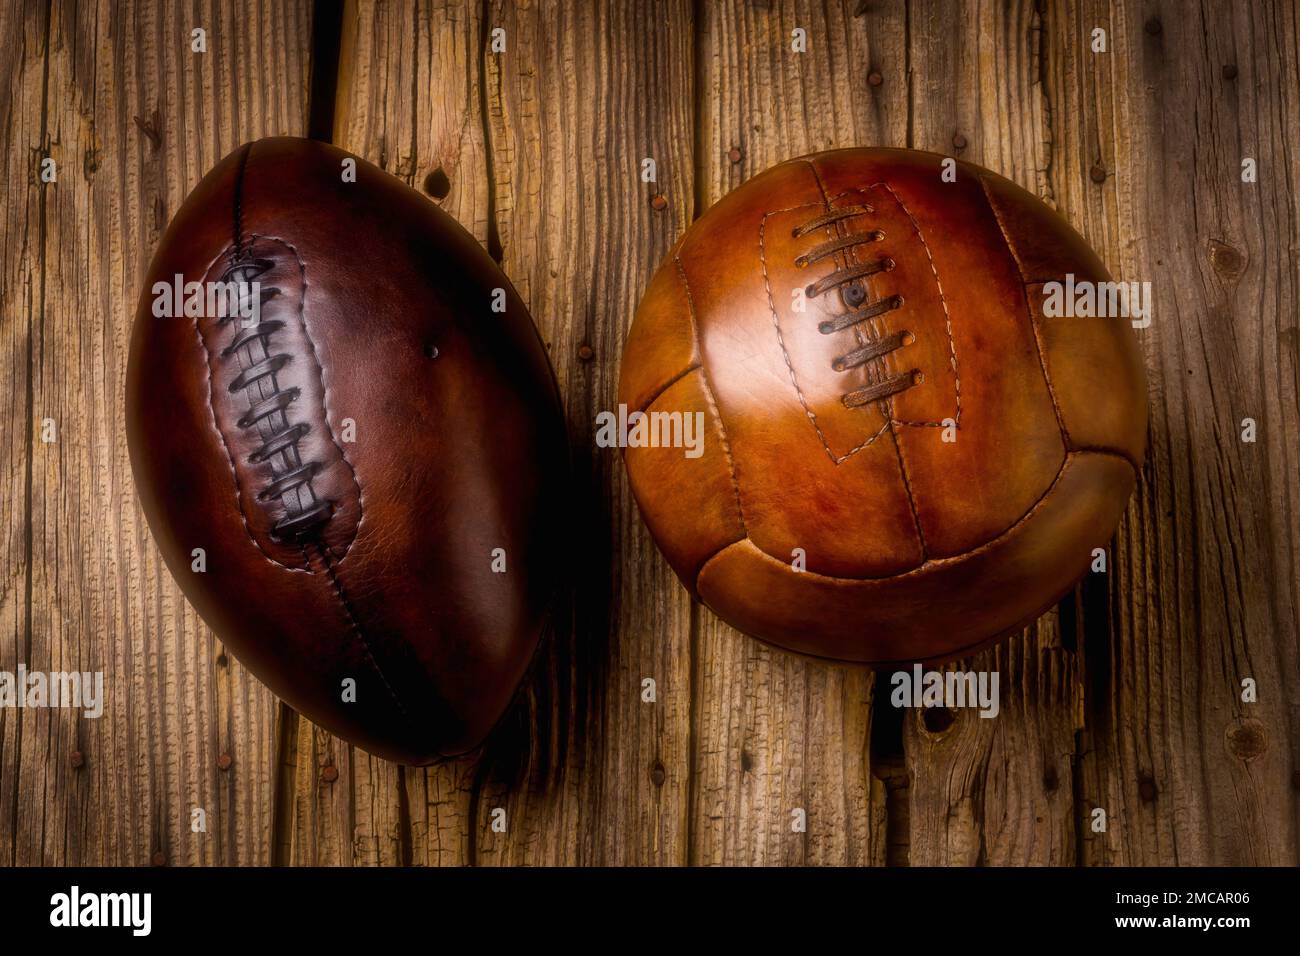 Football And Soccer Ball Stock Photo